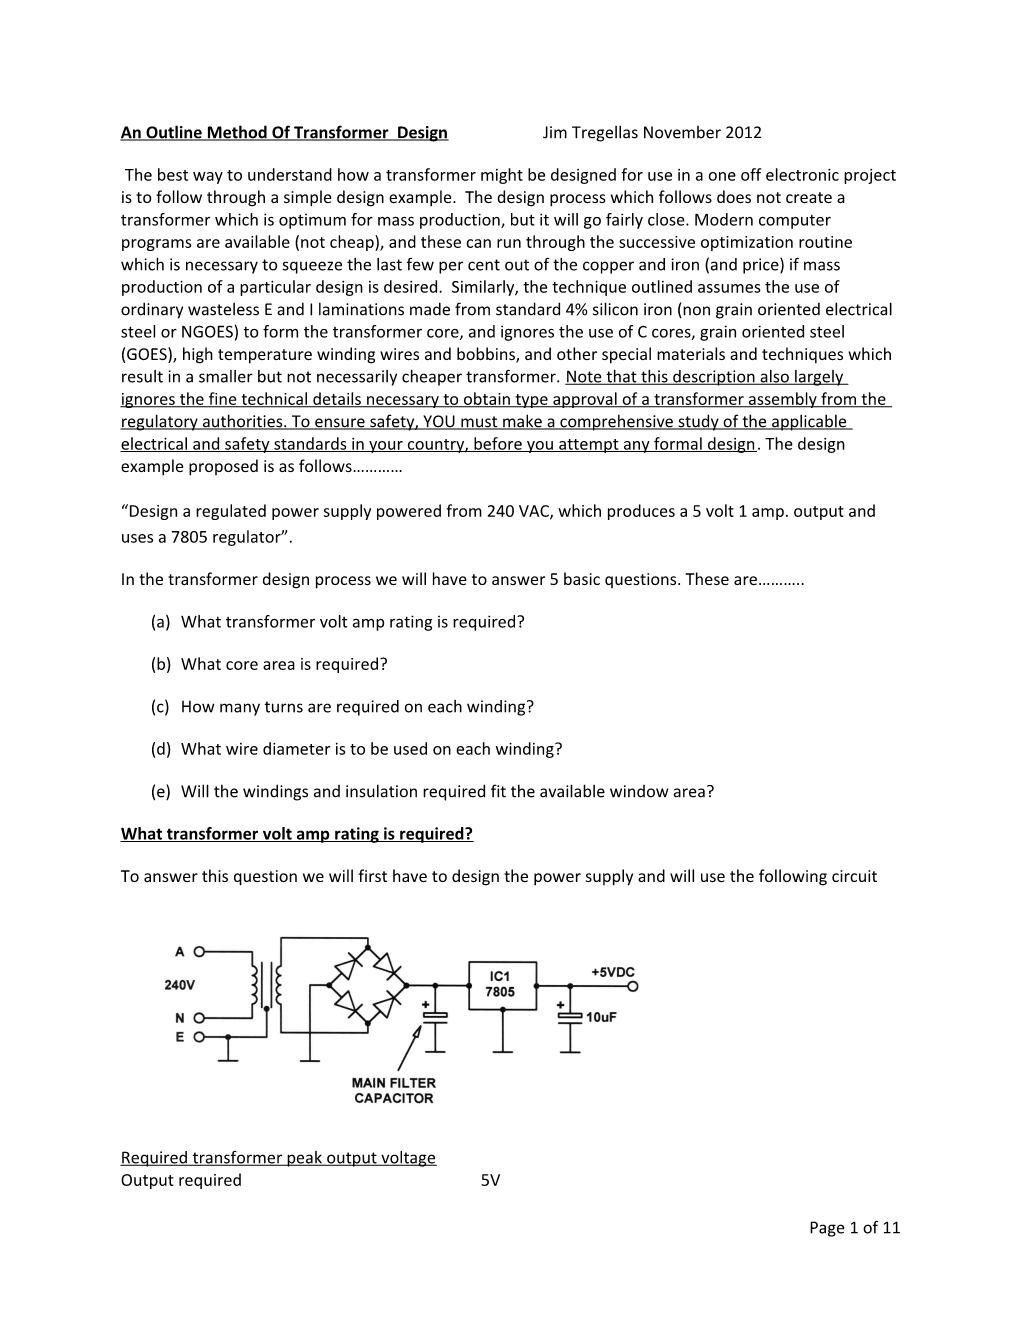 An Outline Method of Transformer Design Jim Tregellas November 2012